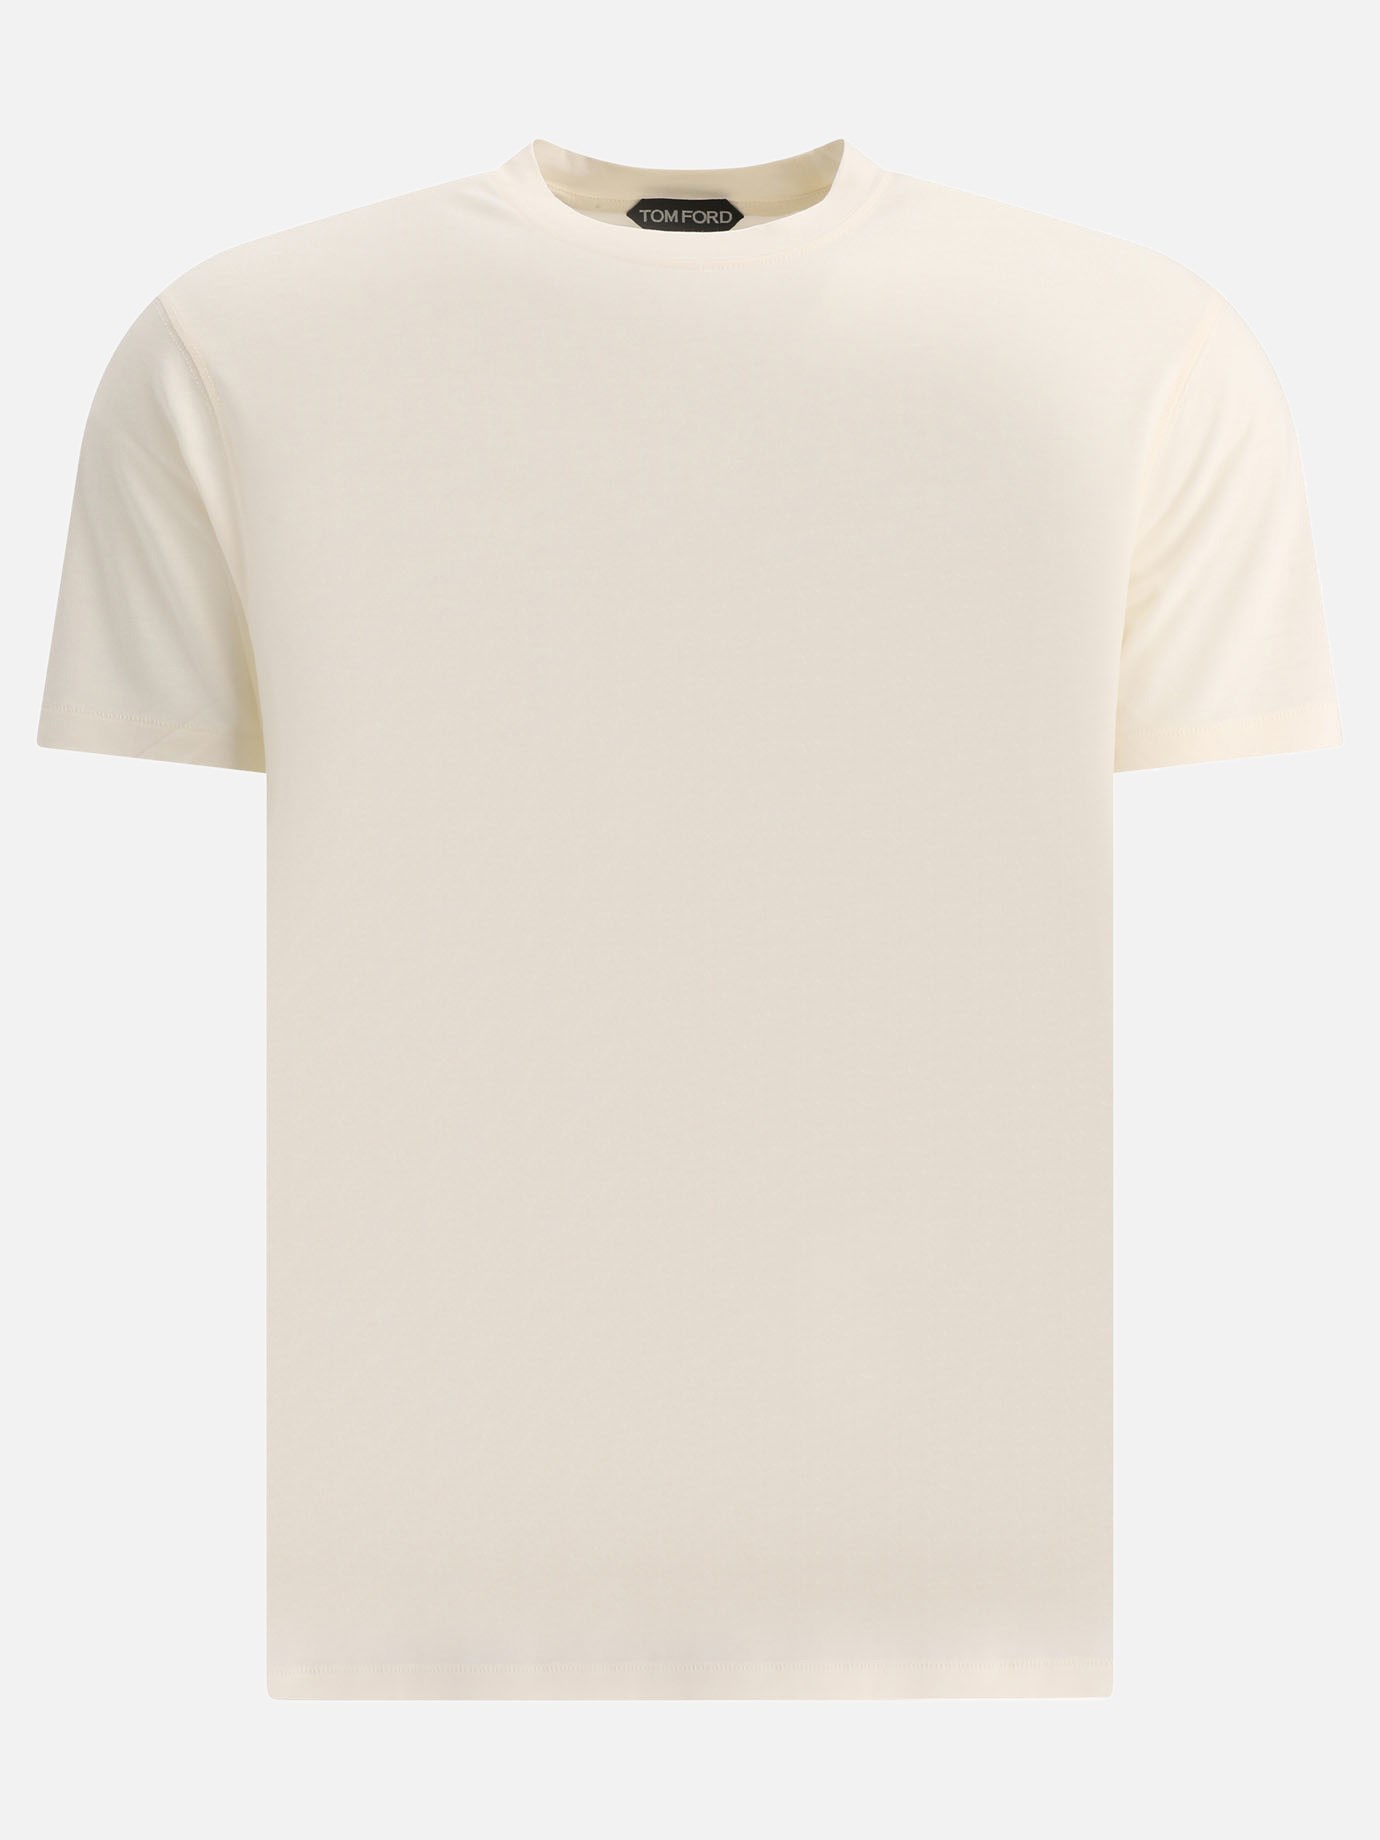  TF  t-shirtby Tom Ford - 1